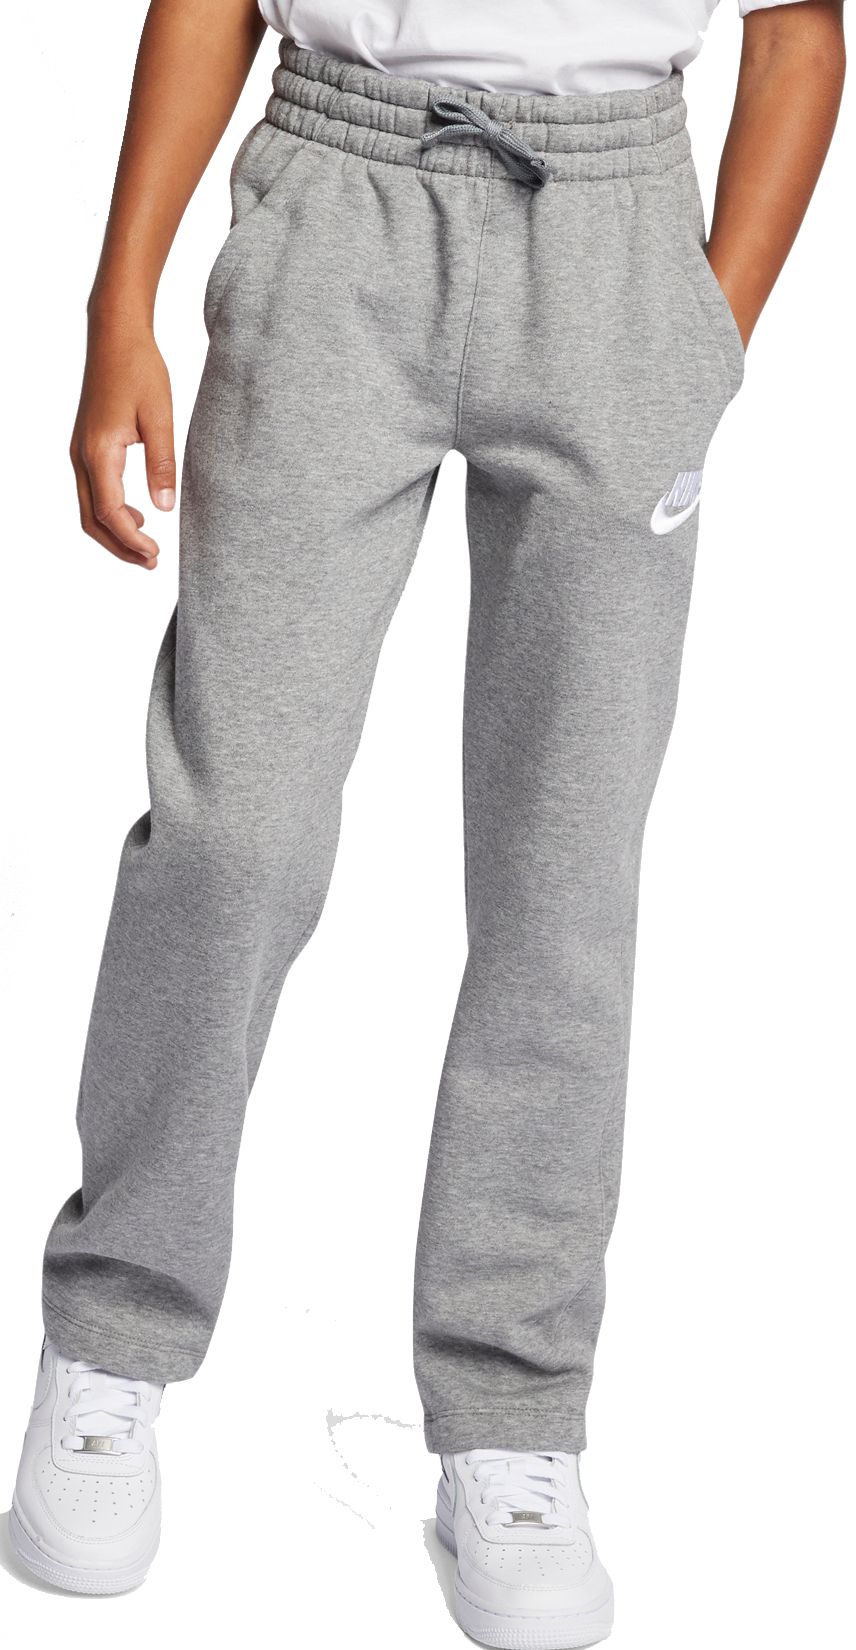 nike grey sweatpants straight leg